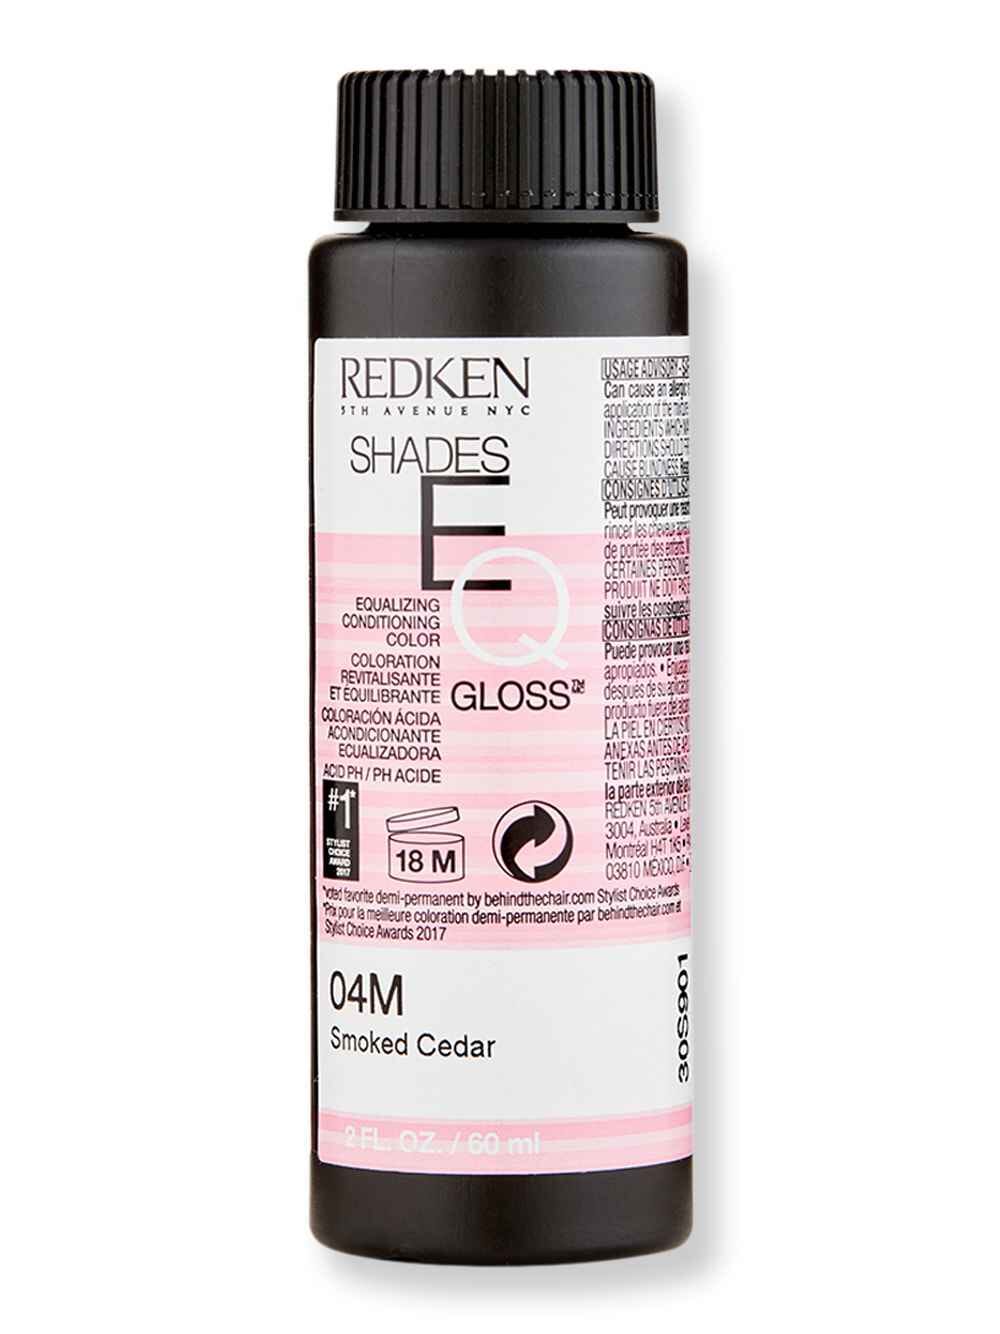 Redken Redken Shades EQ Gloss 2 oz60 ml04M Smoked Cedar Hair Color 